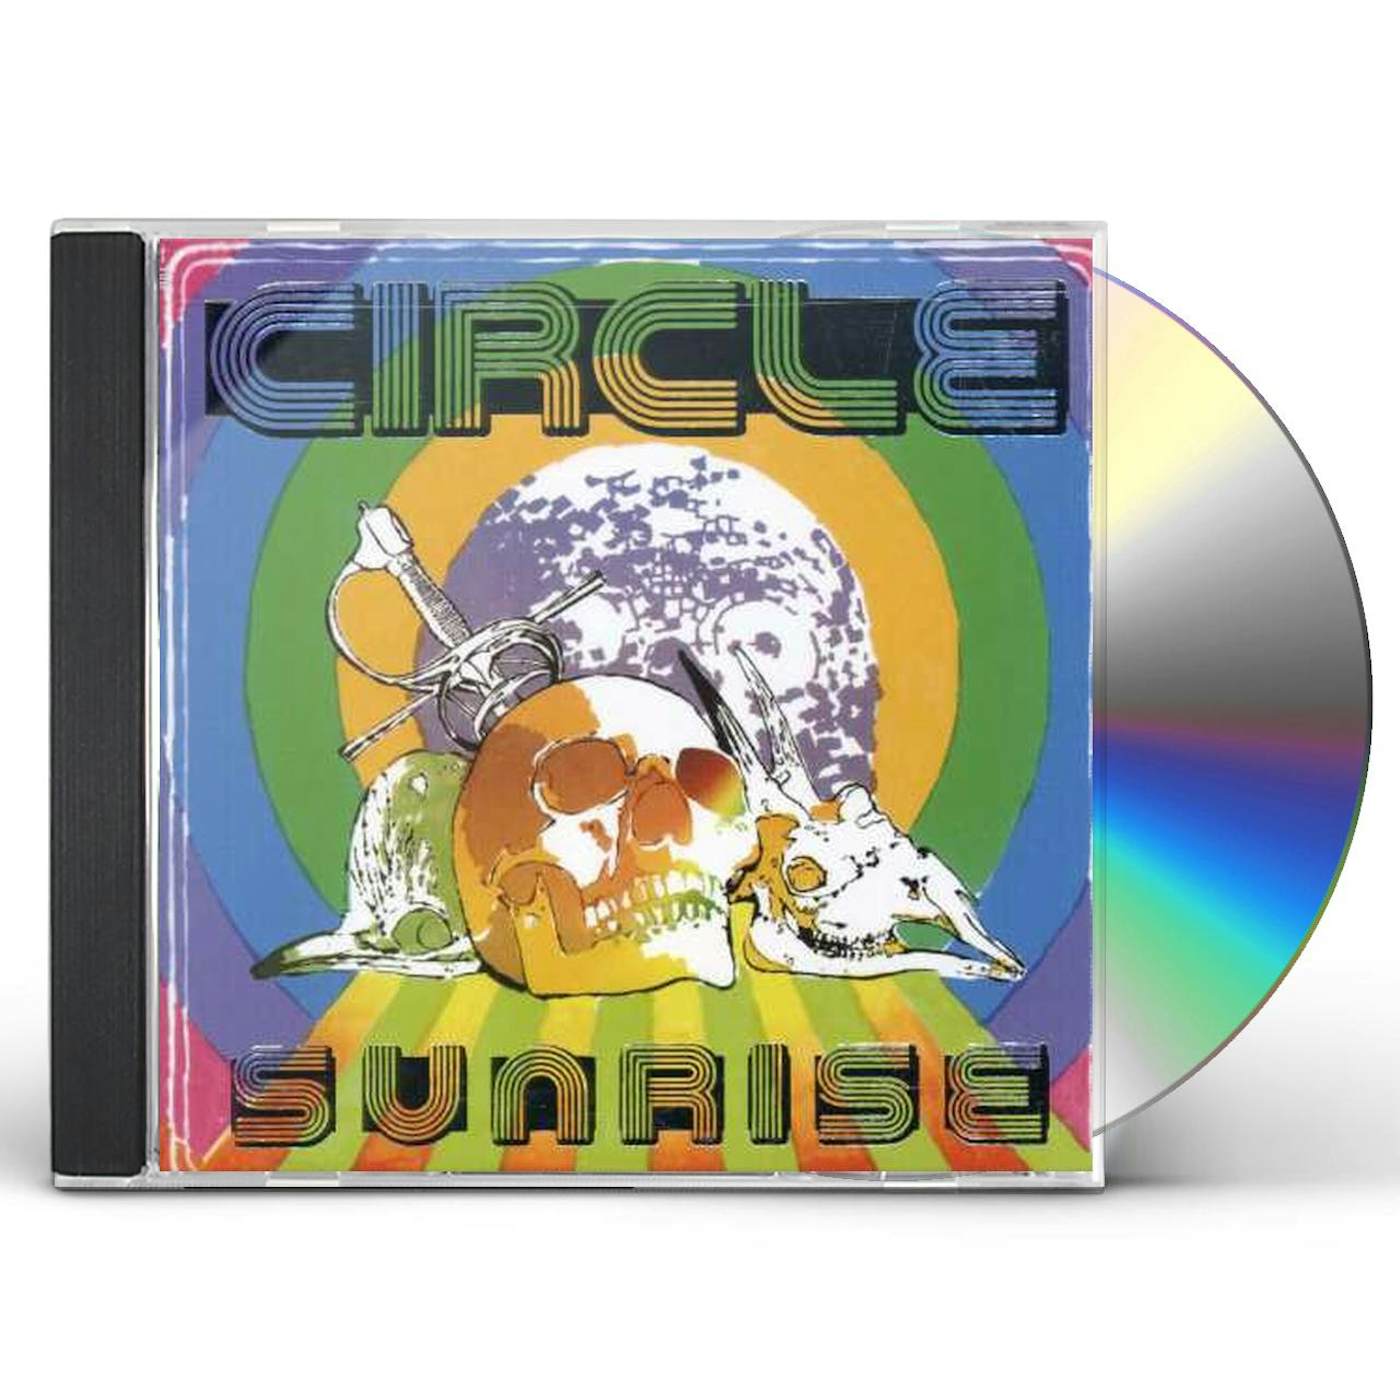 Circle SUNRISE CD